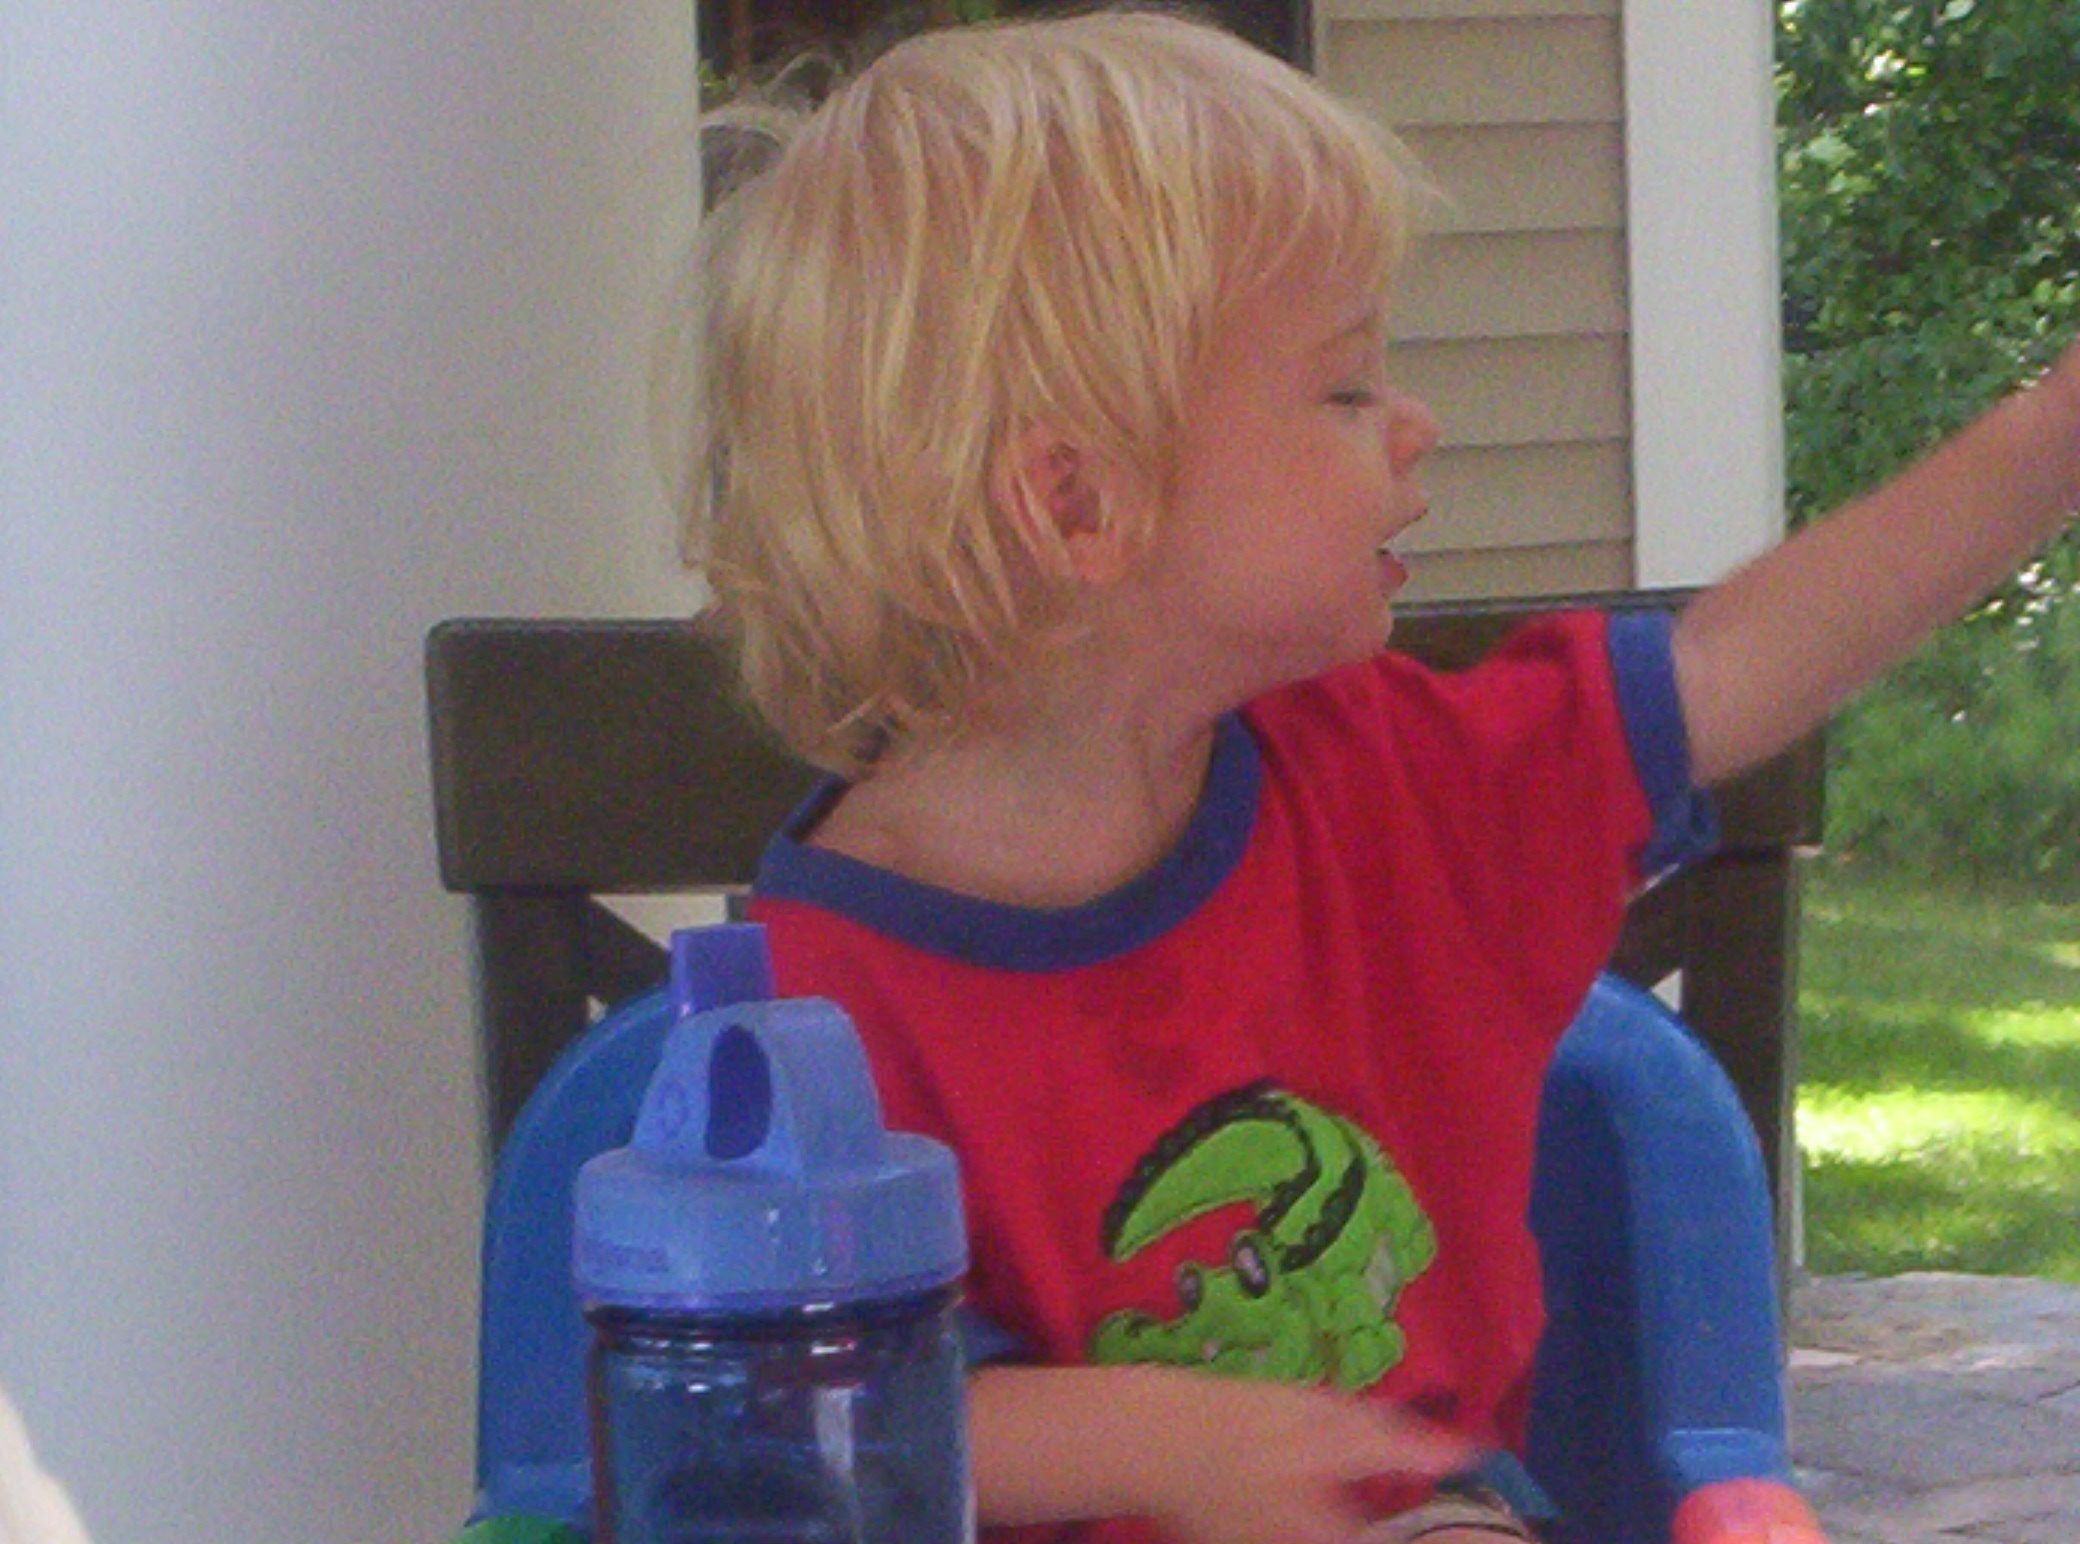 little blond boy sitting on chair holding a blue water bottle